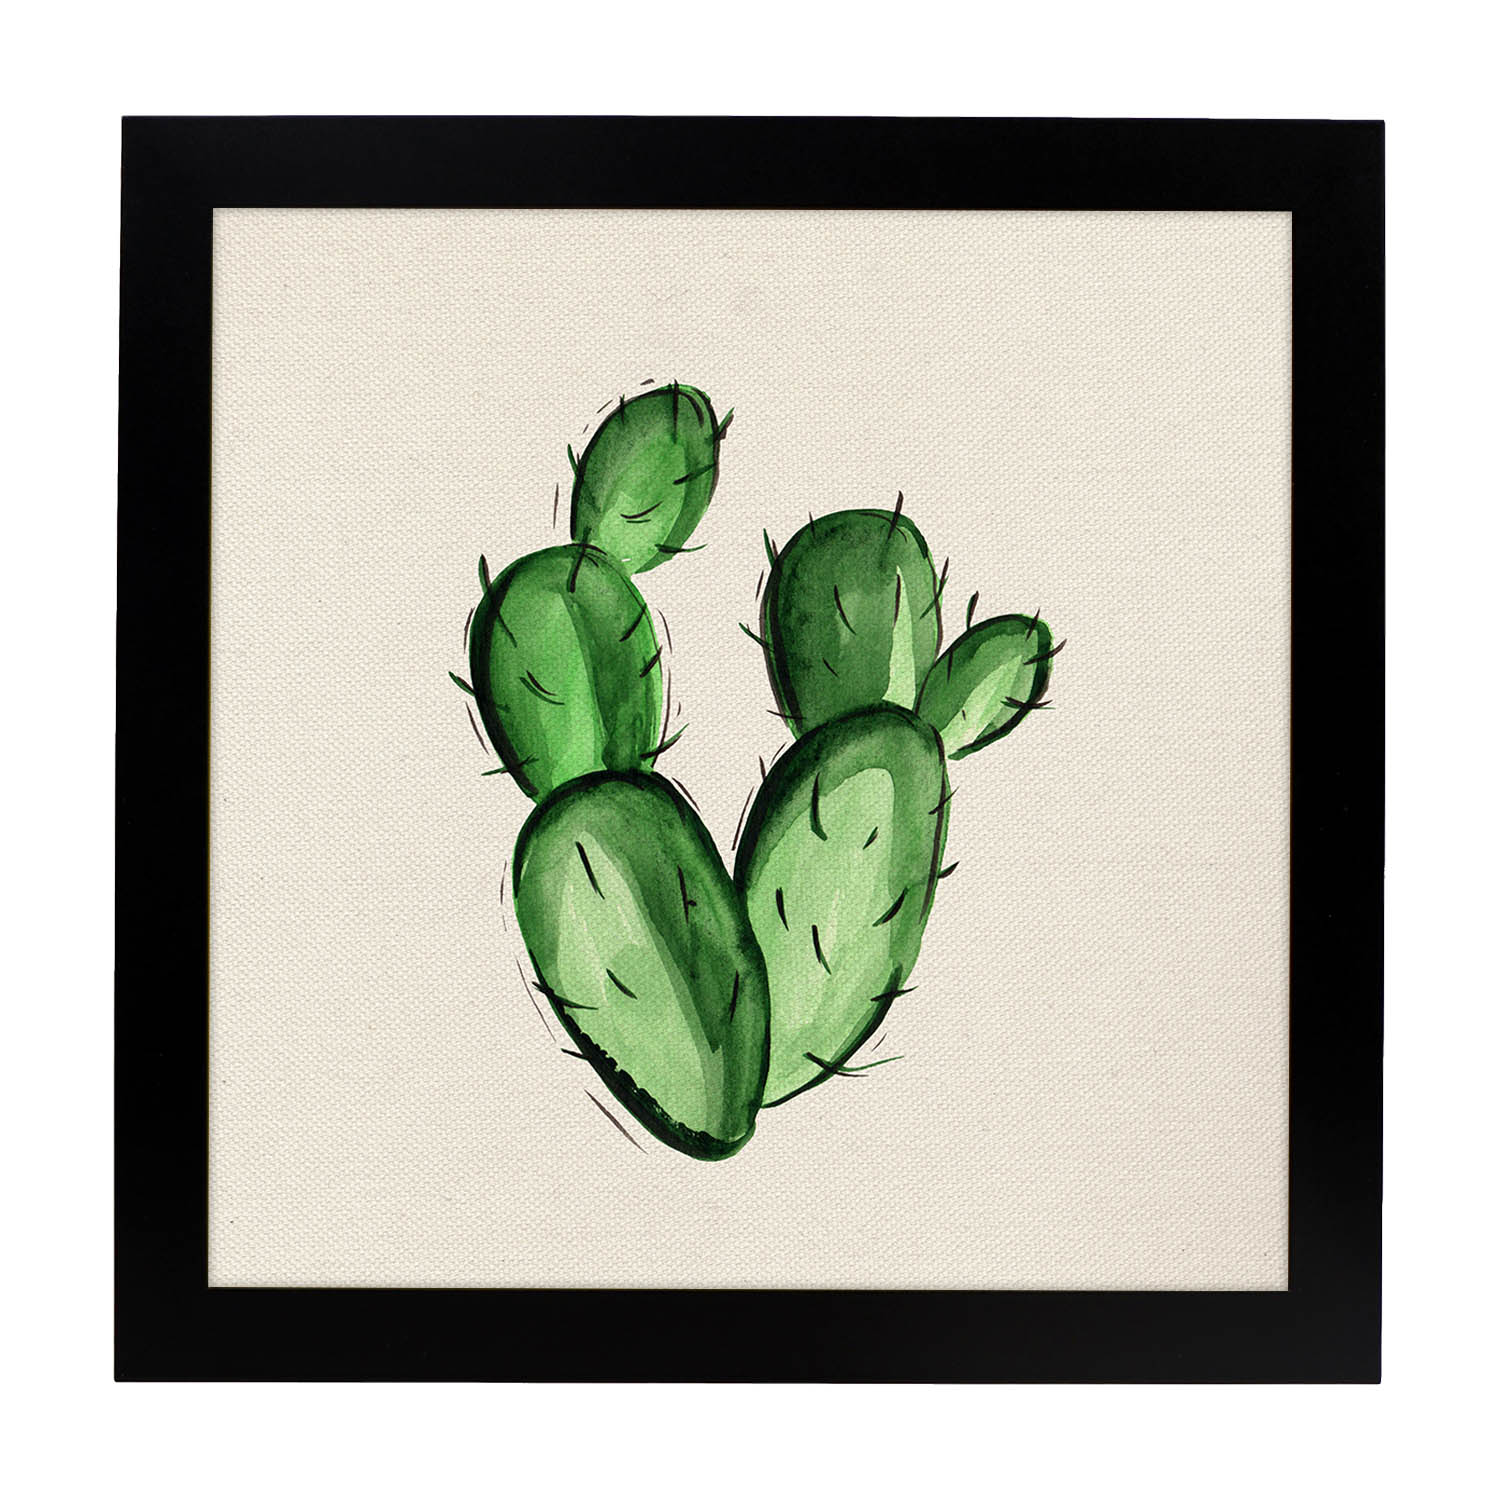 Poster de cactus dibujado. Lámina de Todo pasión-Artwork-Nacnic-25x25 cm-Marco Negro-Nacnic Estudio SL